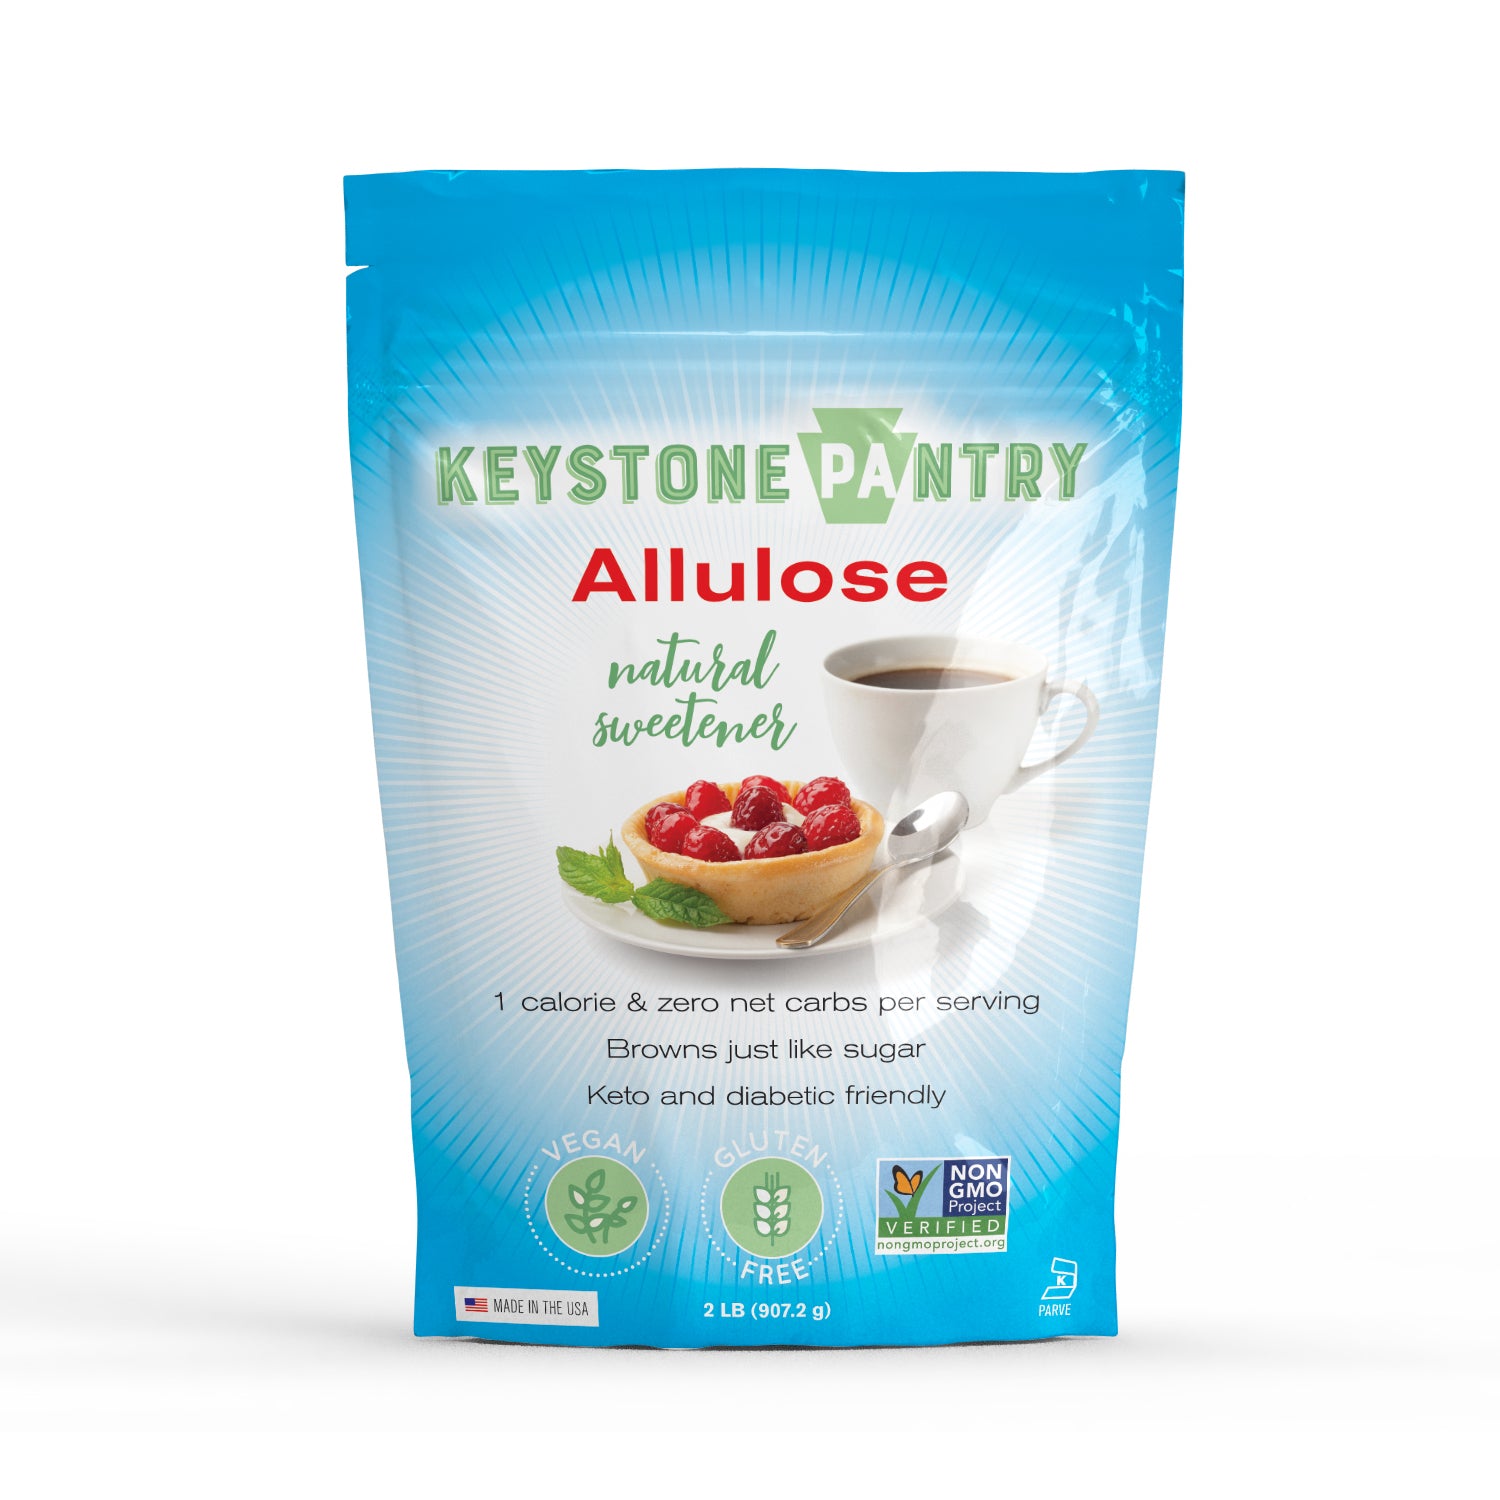 Keystone Pantry Allulose Vegan, Keto and Diabetic Friendly Natural Sweetener